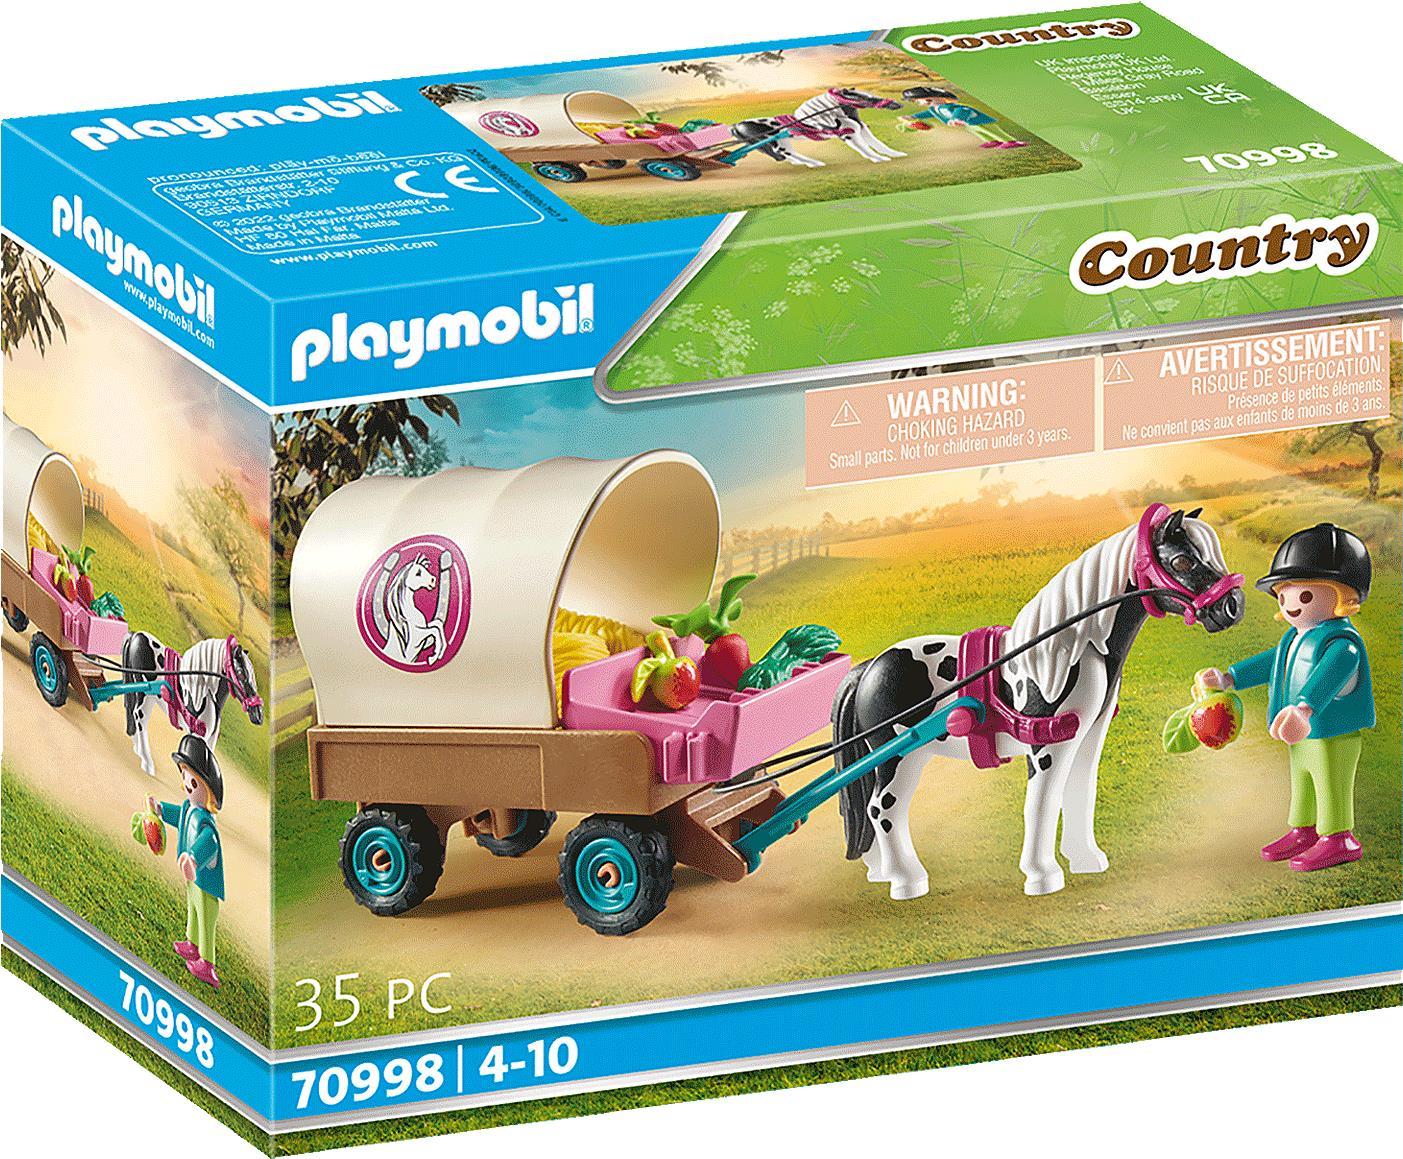 Playmobil Country Ponykutsche (70998)